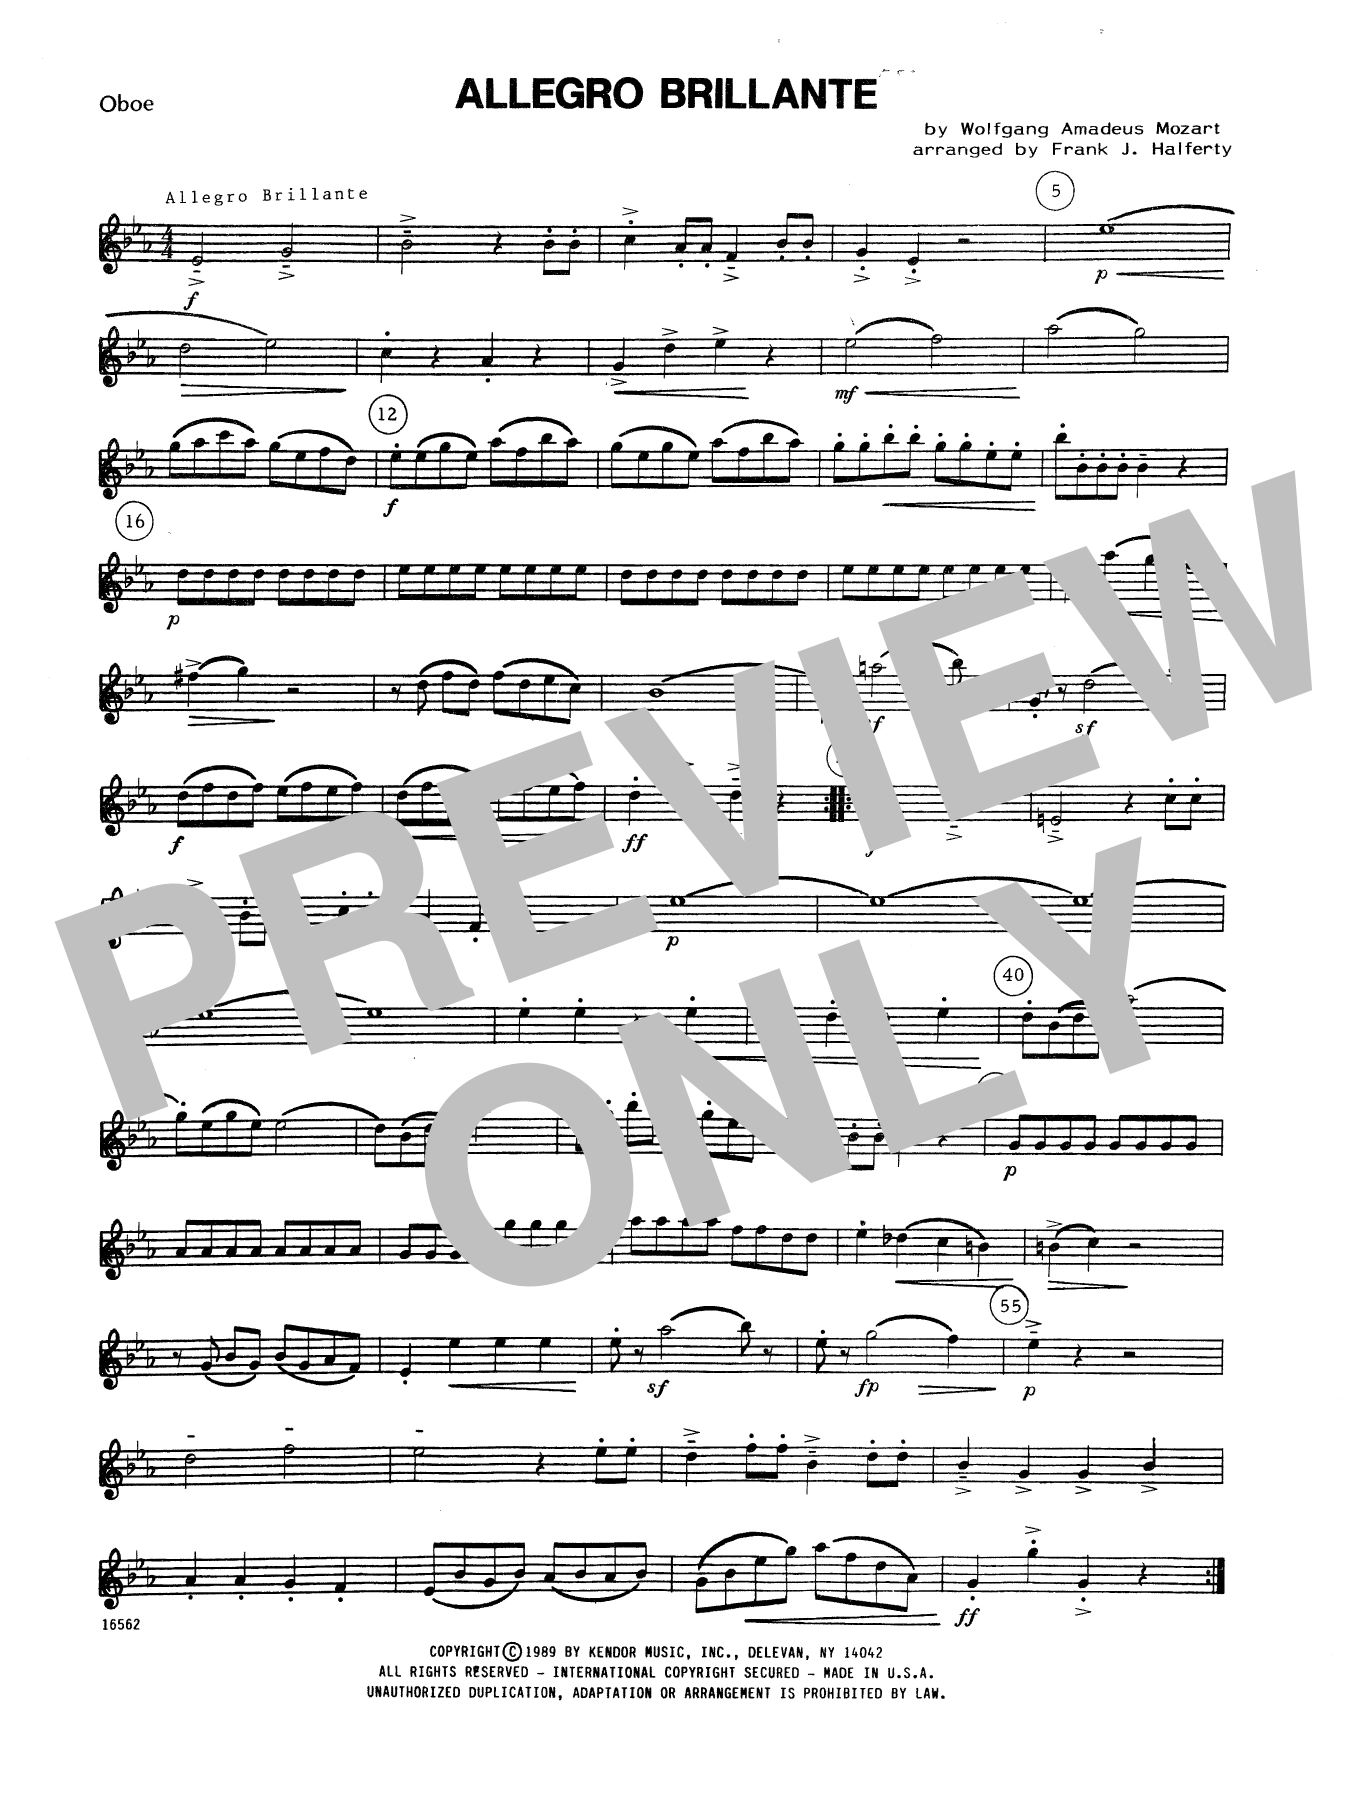 Download Frank J. Halferty Allegro Brillante - Oboe Sheet Music